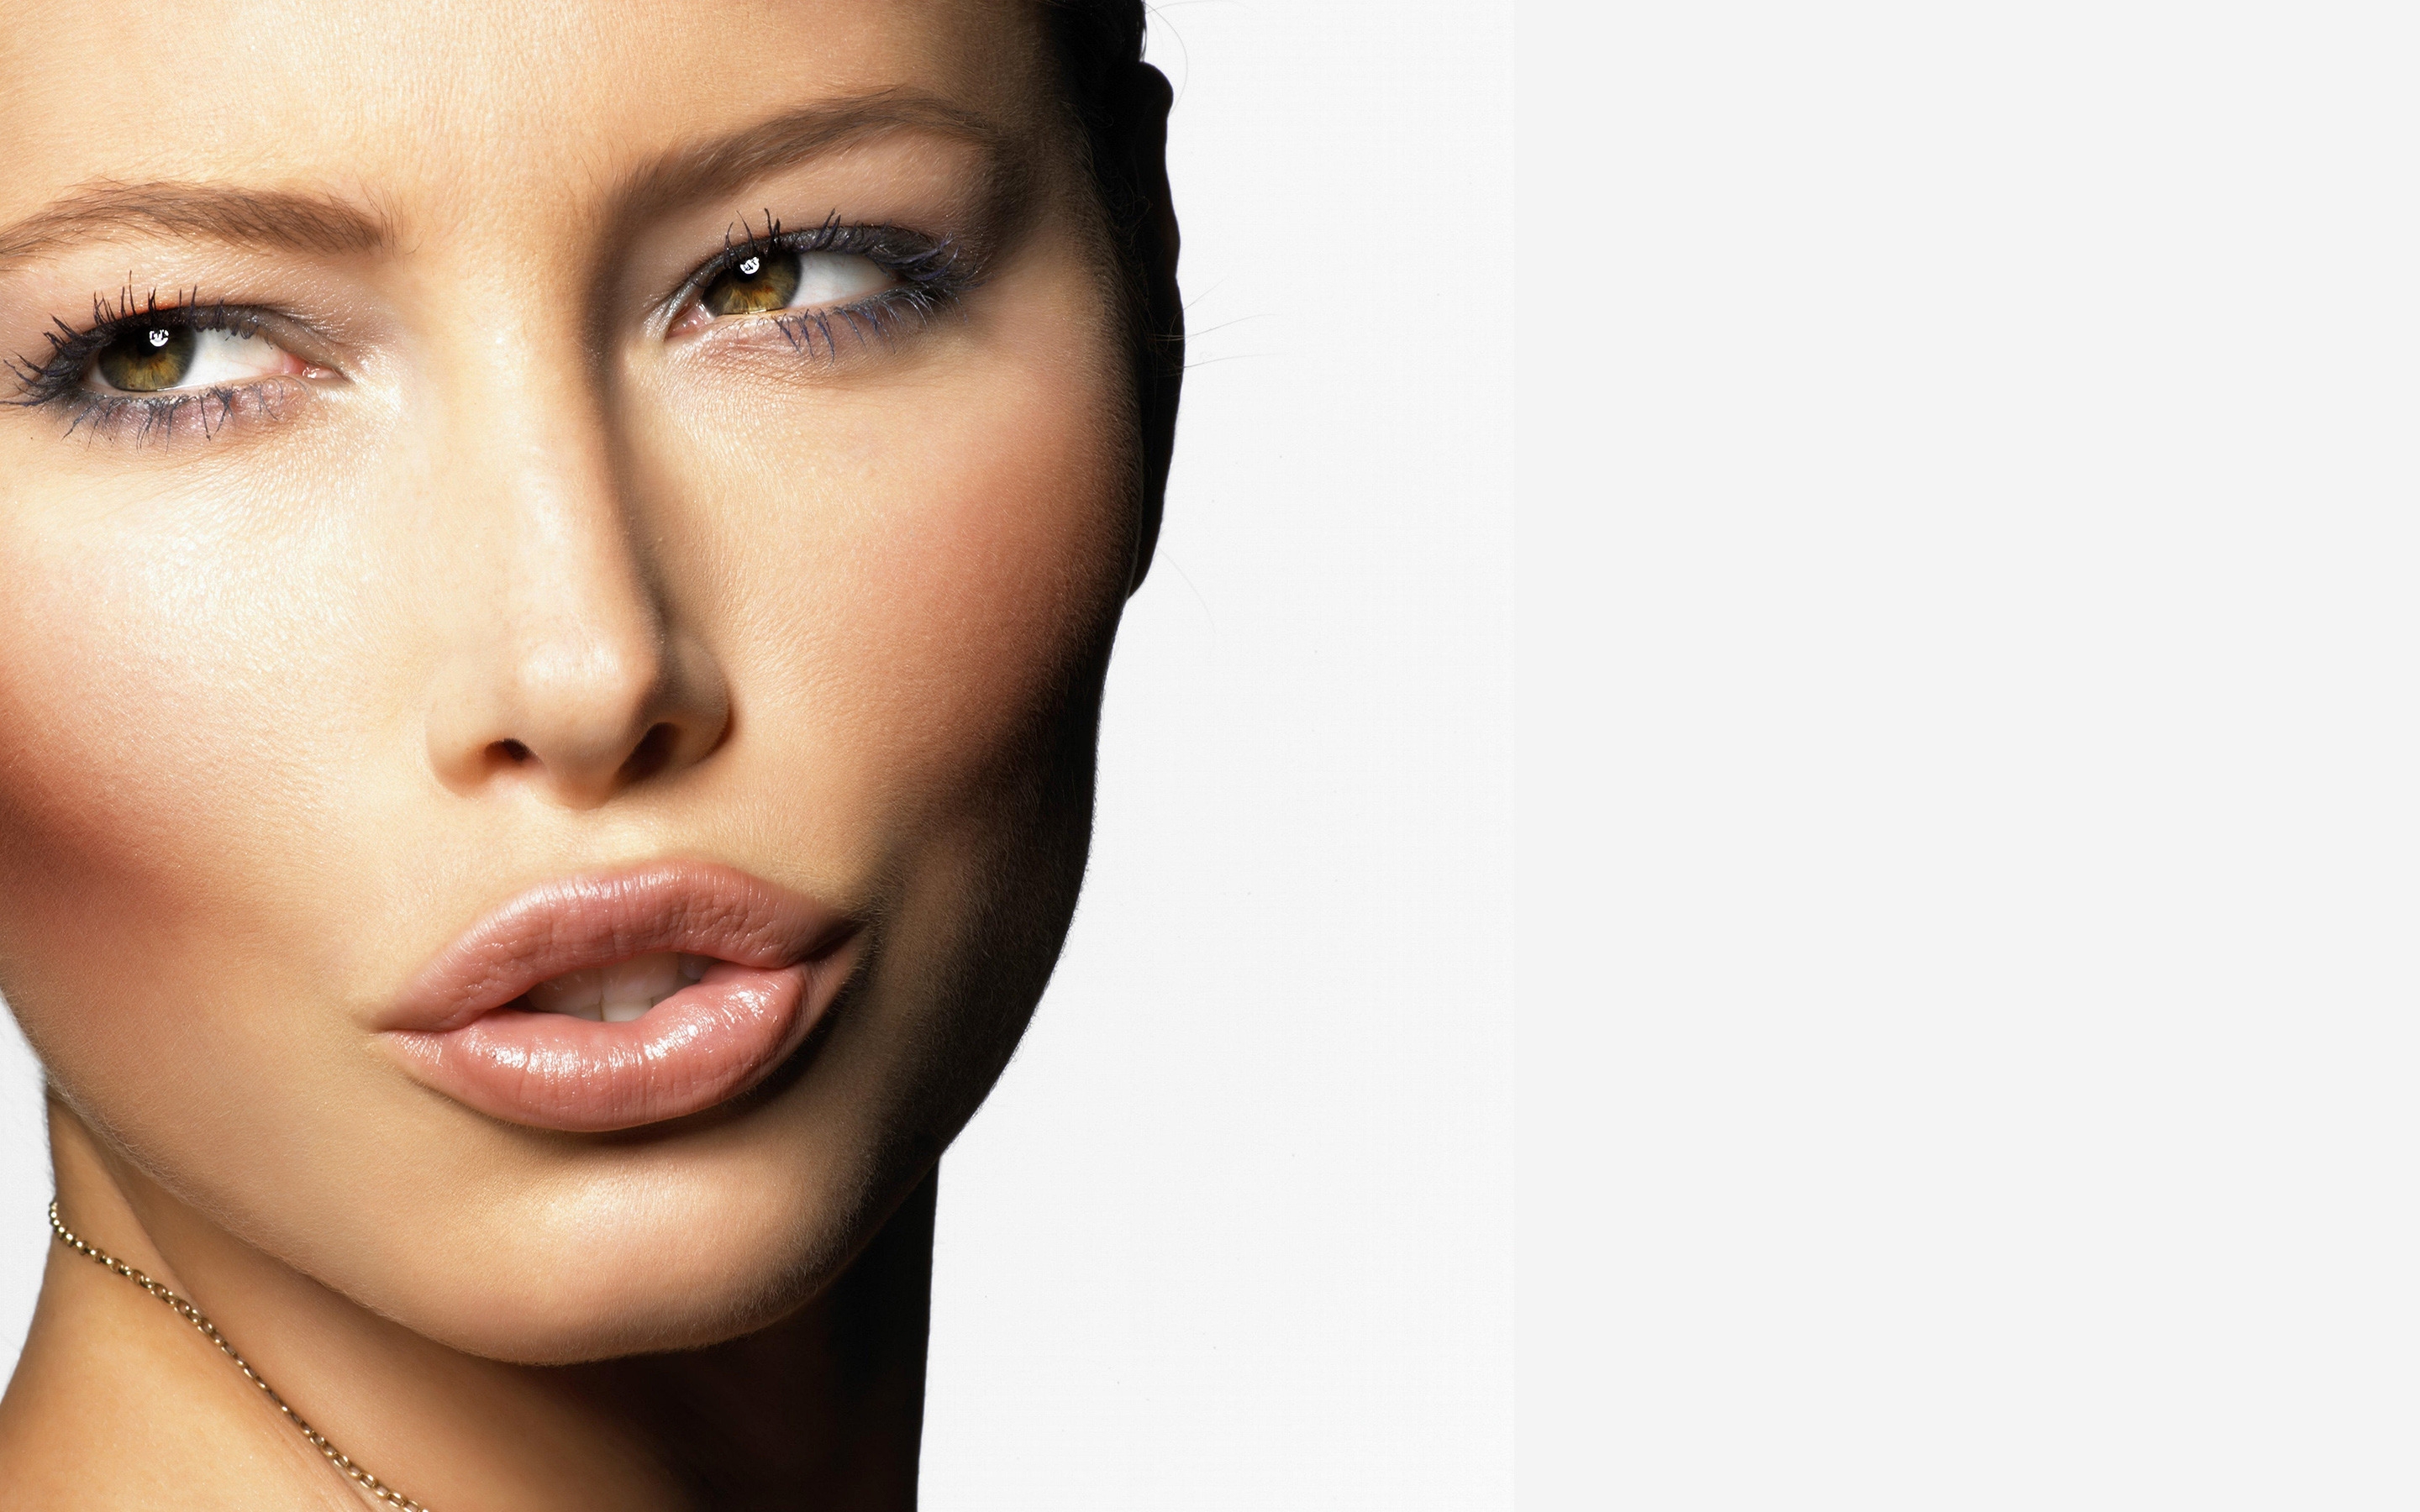 Jessica Biel Perfect Face for 2880 x 1800 Retina Display resolution